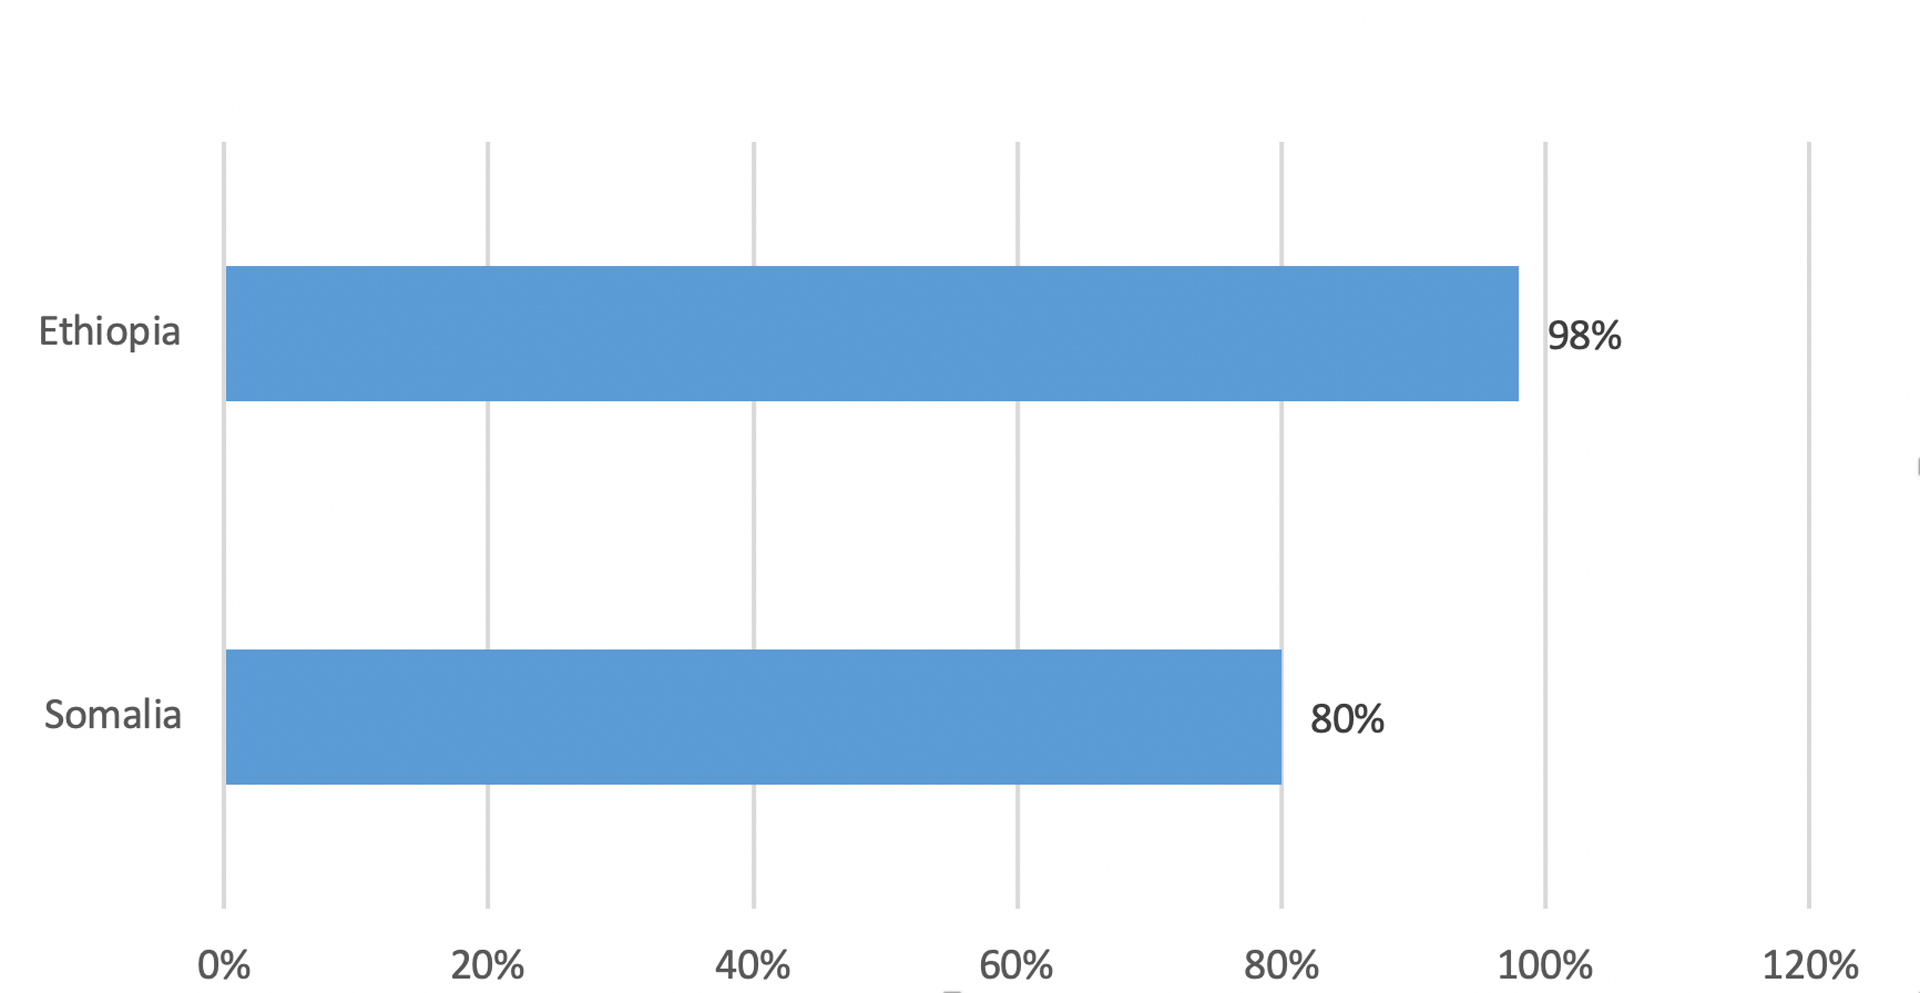 Percentage of IDPs in Ethiopia and Somalia who prefer local integration.